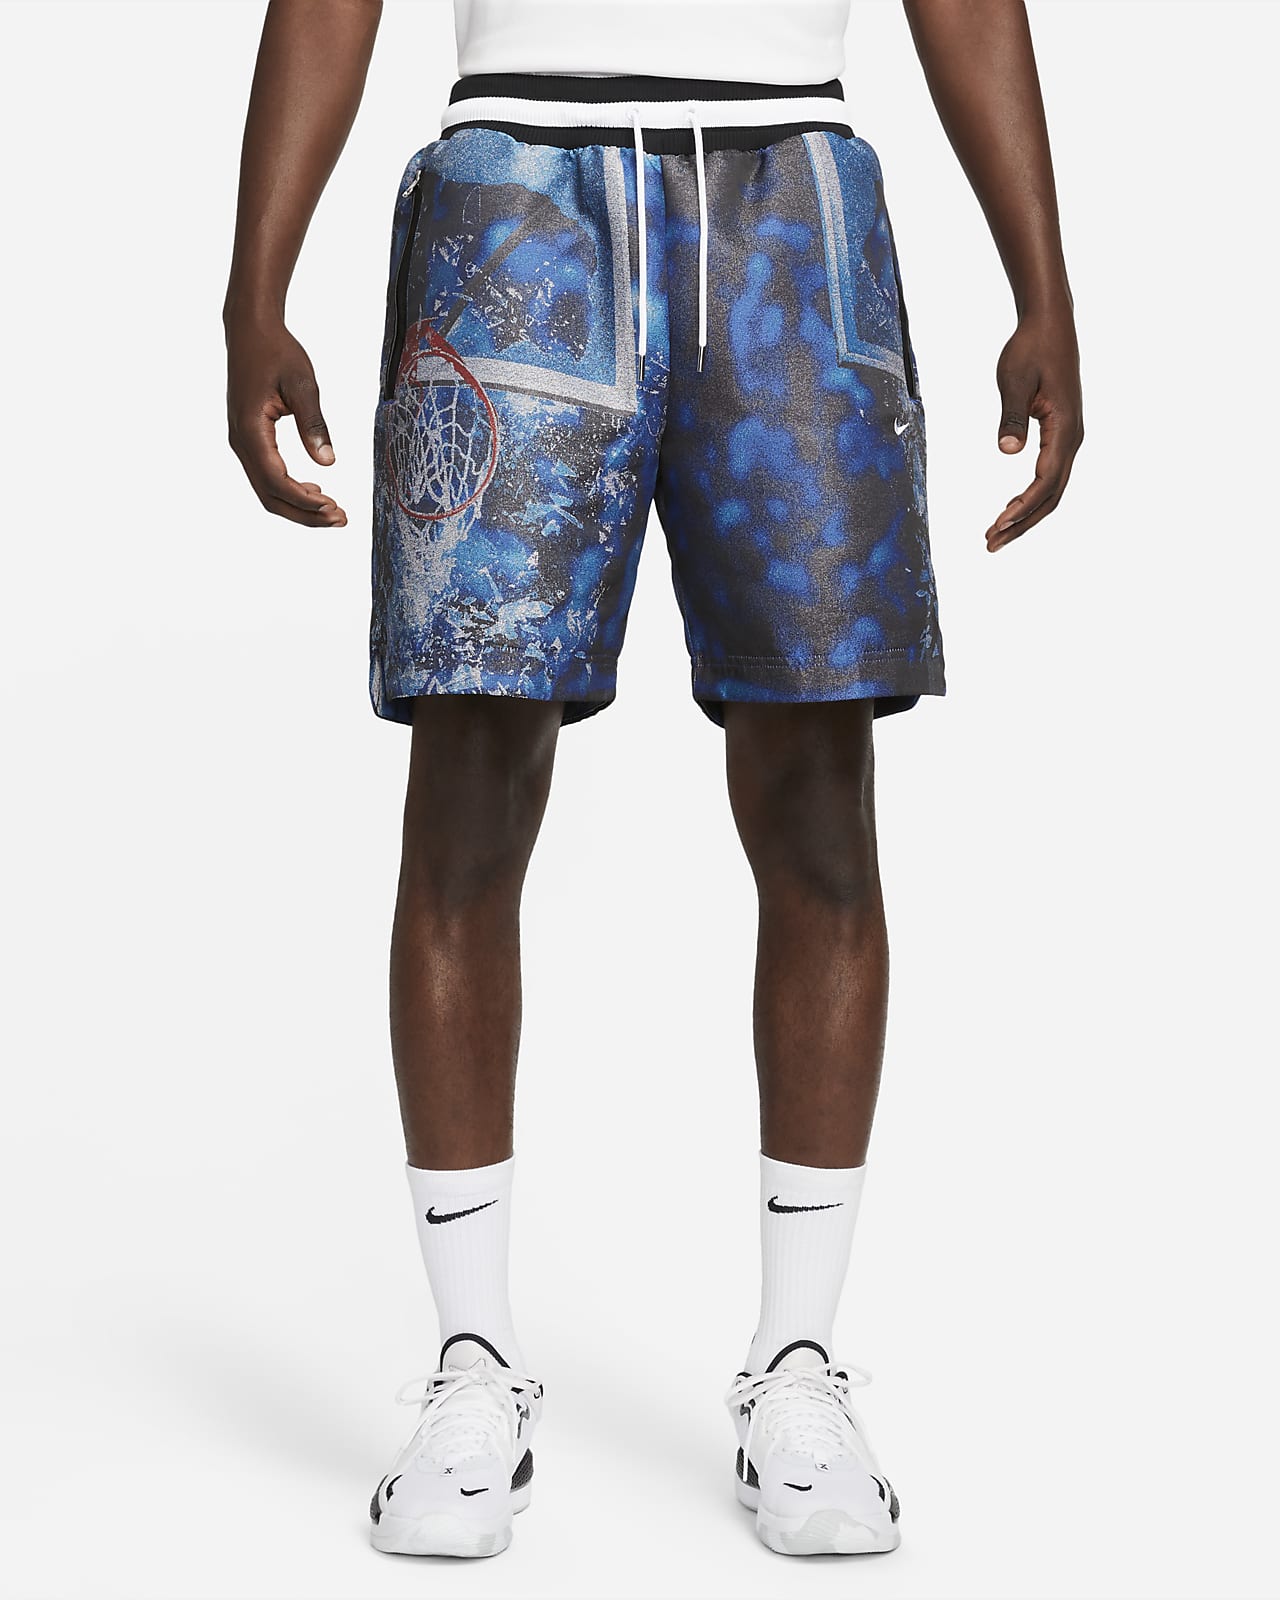 Nike DNA Basketball Shorts. 8\